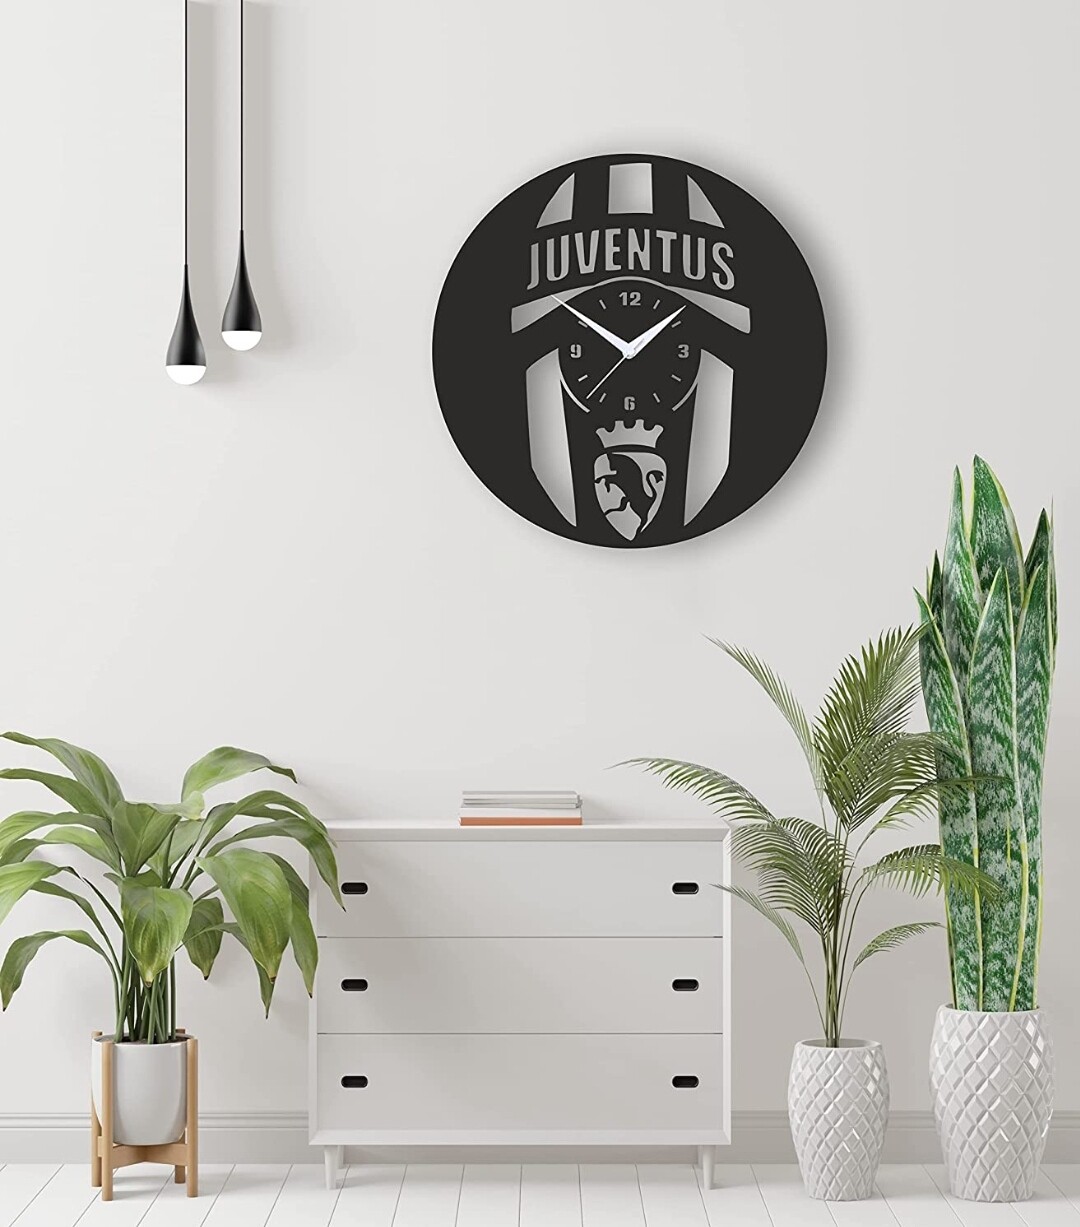 Juventus Wall Clock